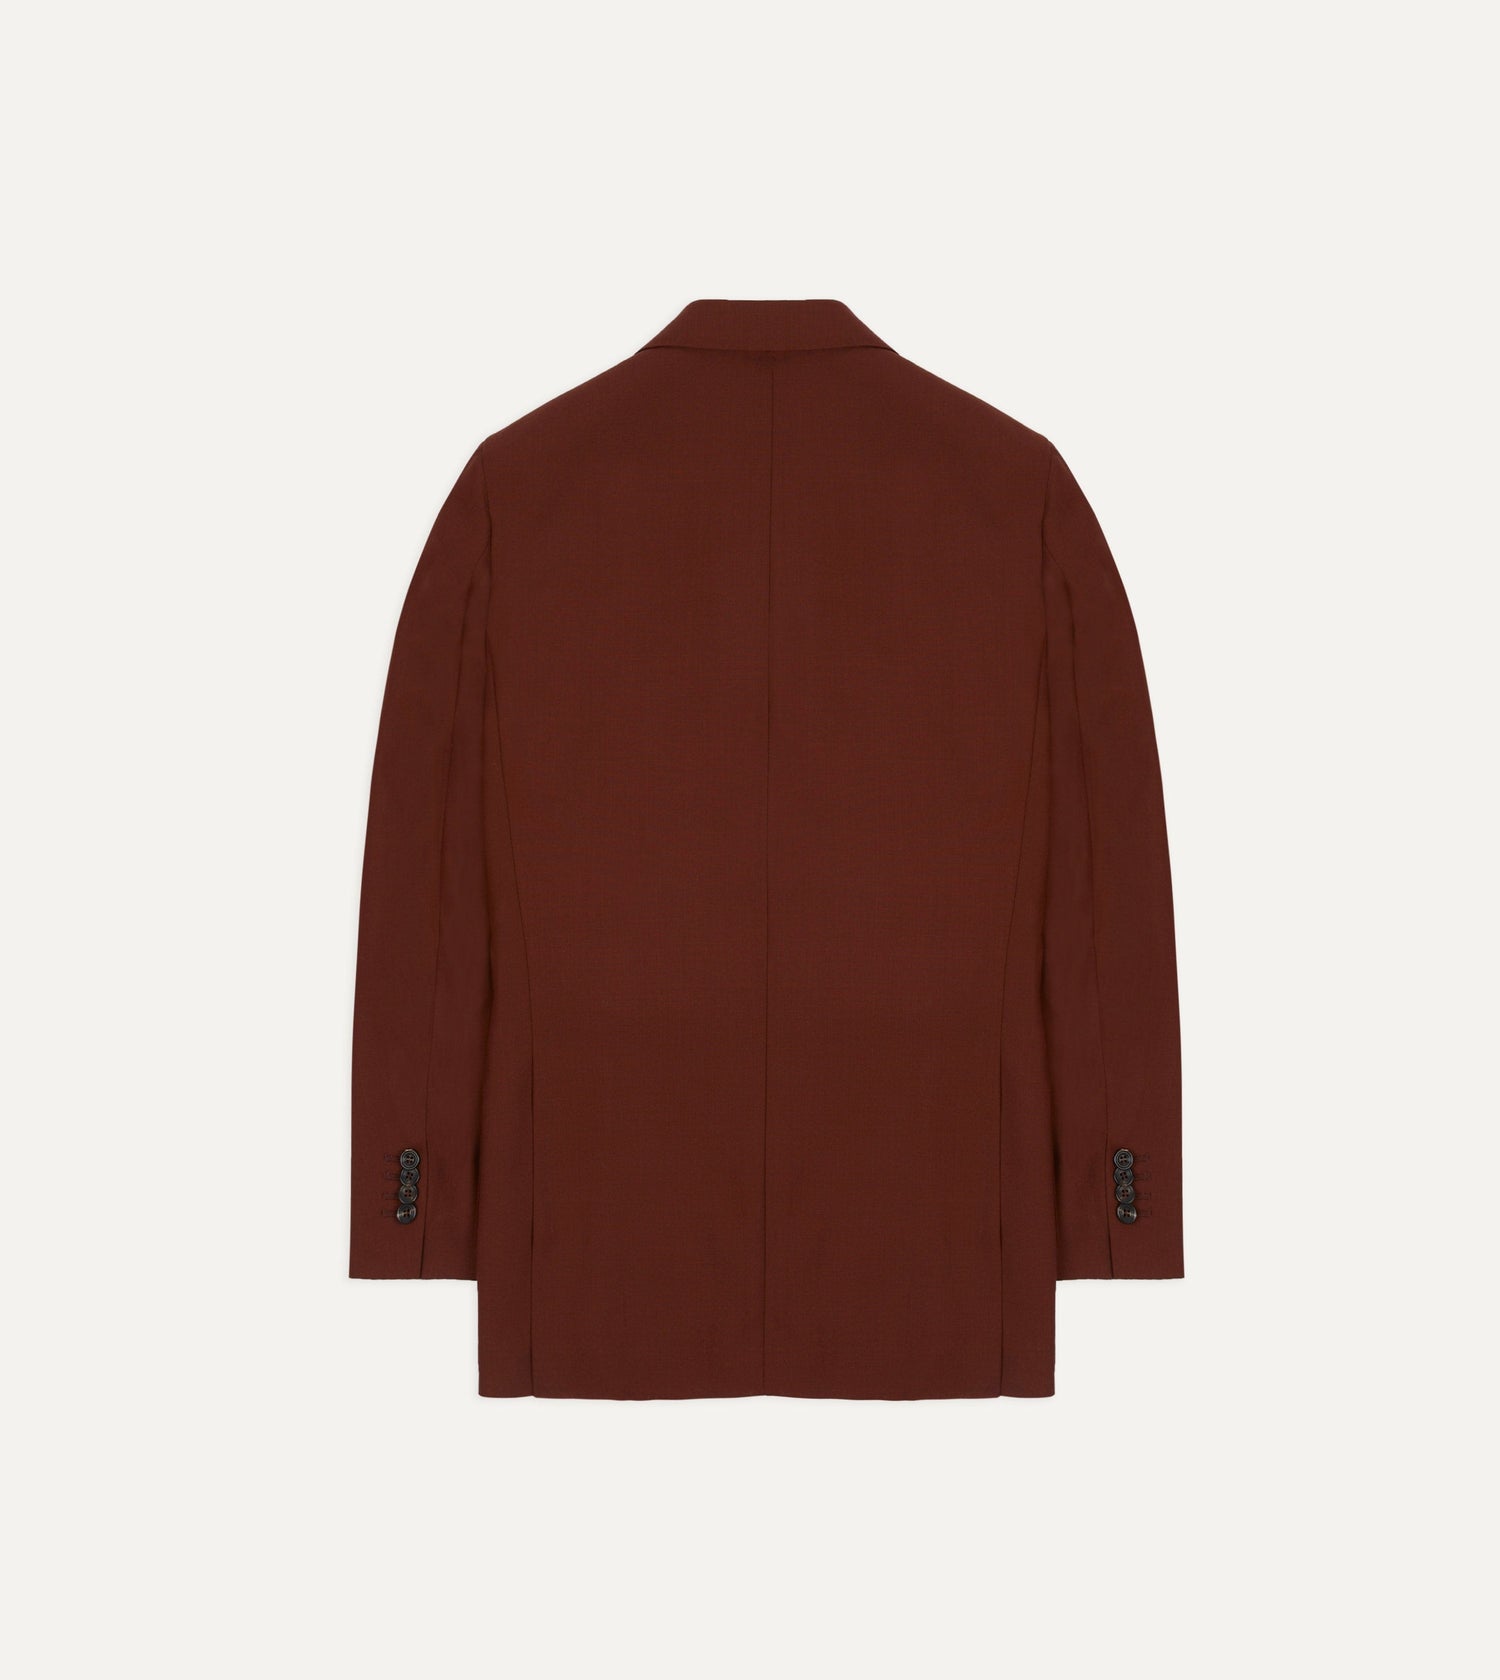 ALD / Drake's Single Breasted Wool Fresco Suit Jacket